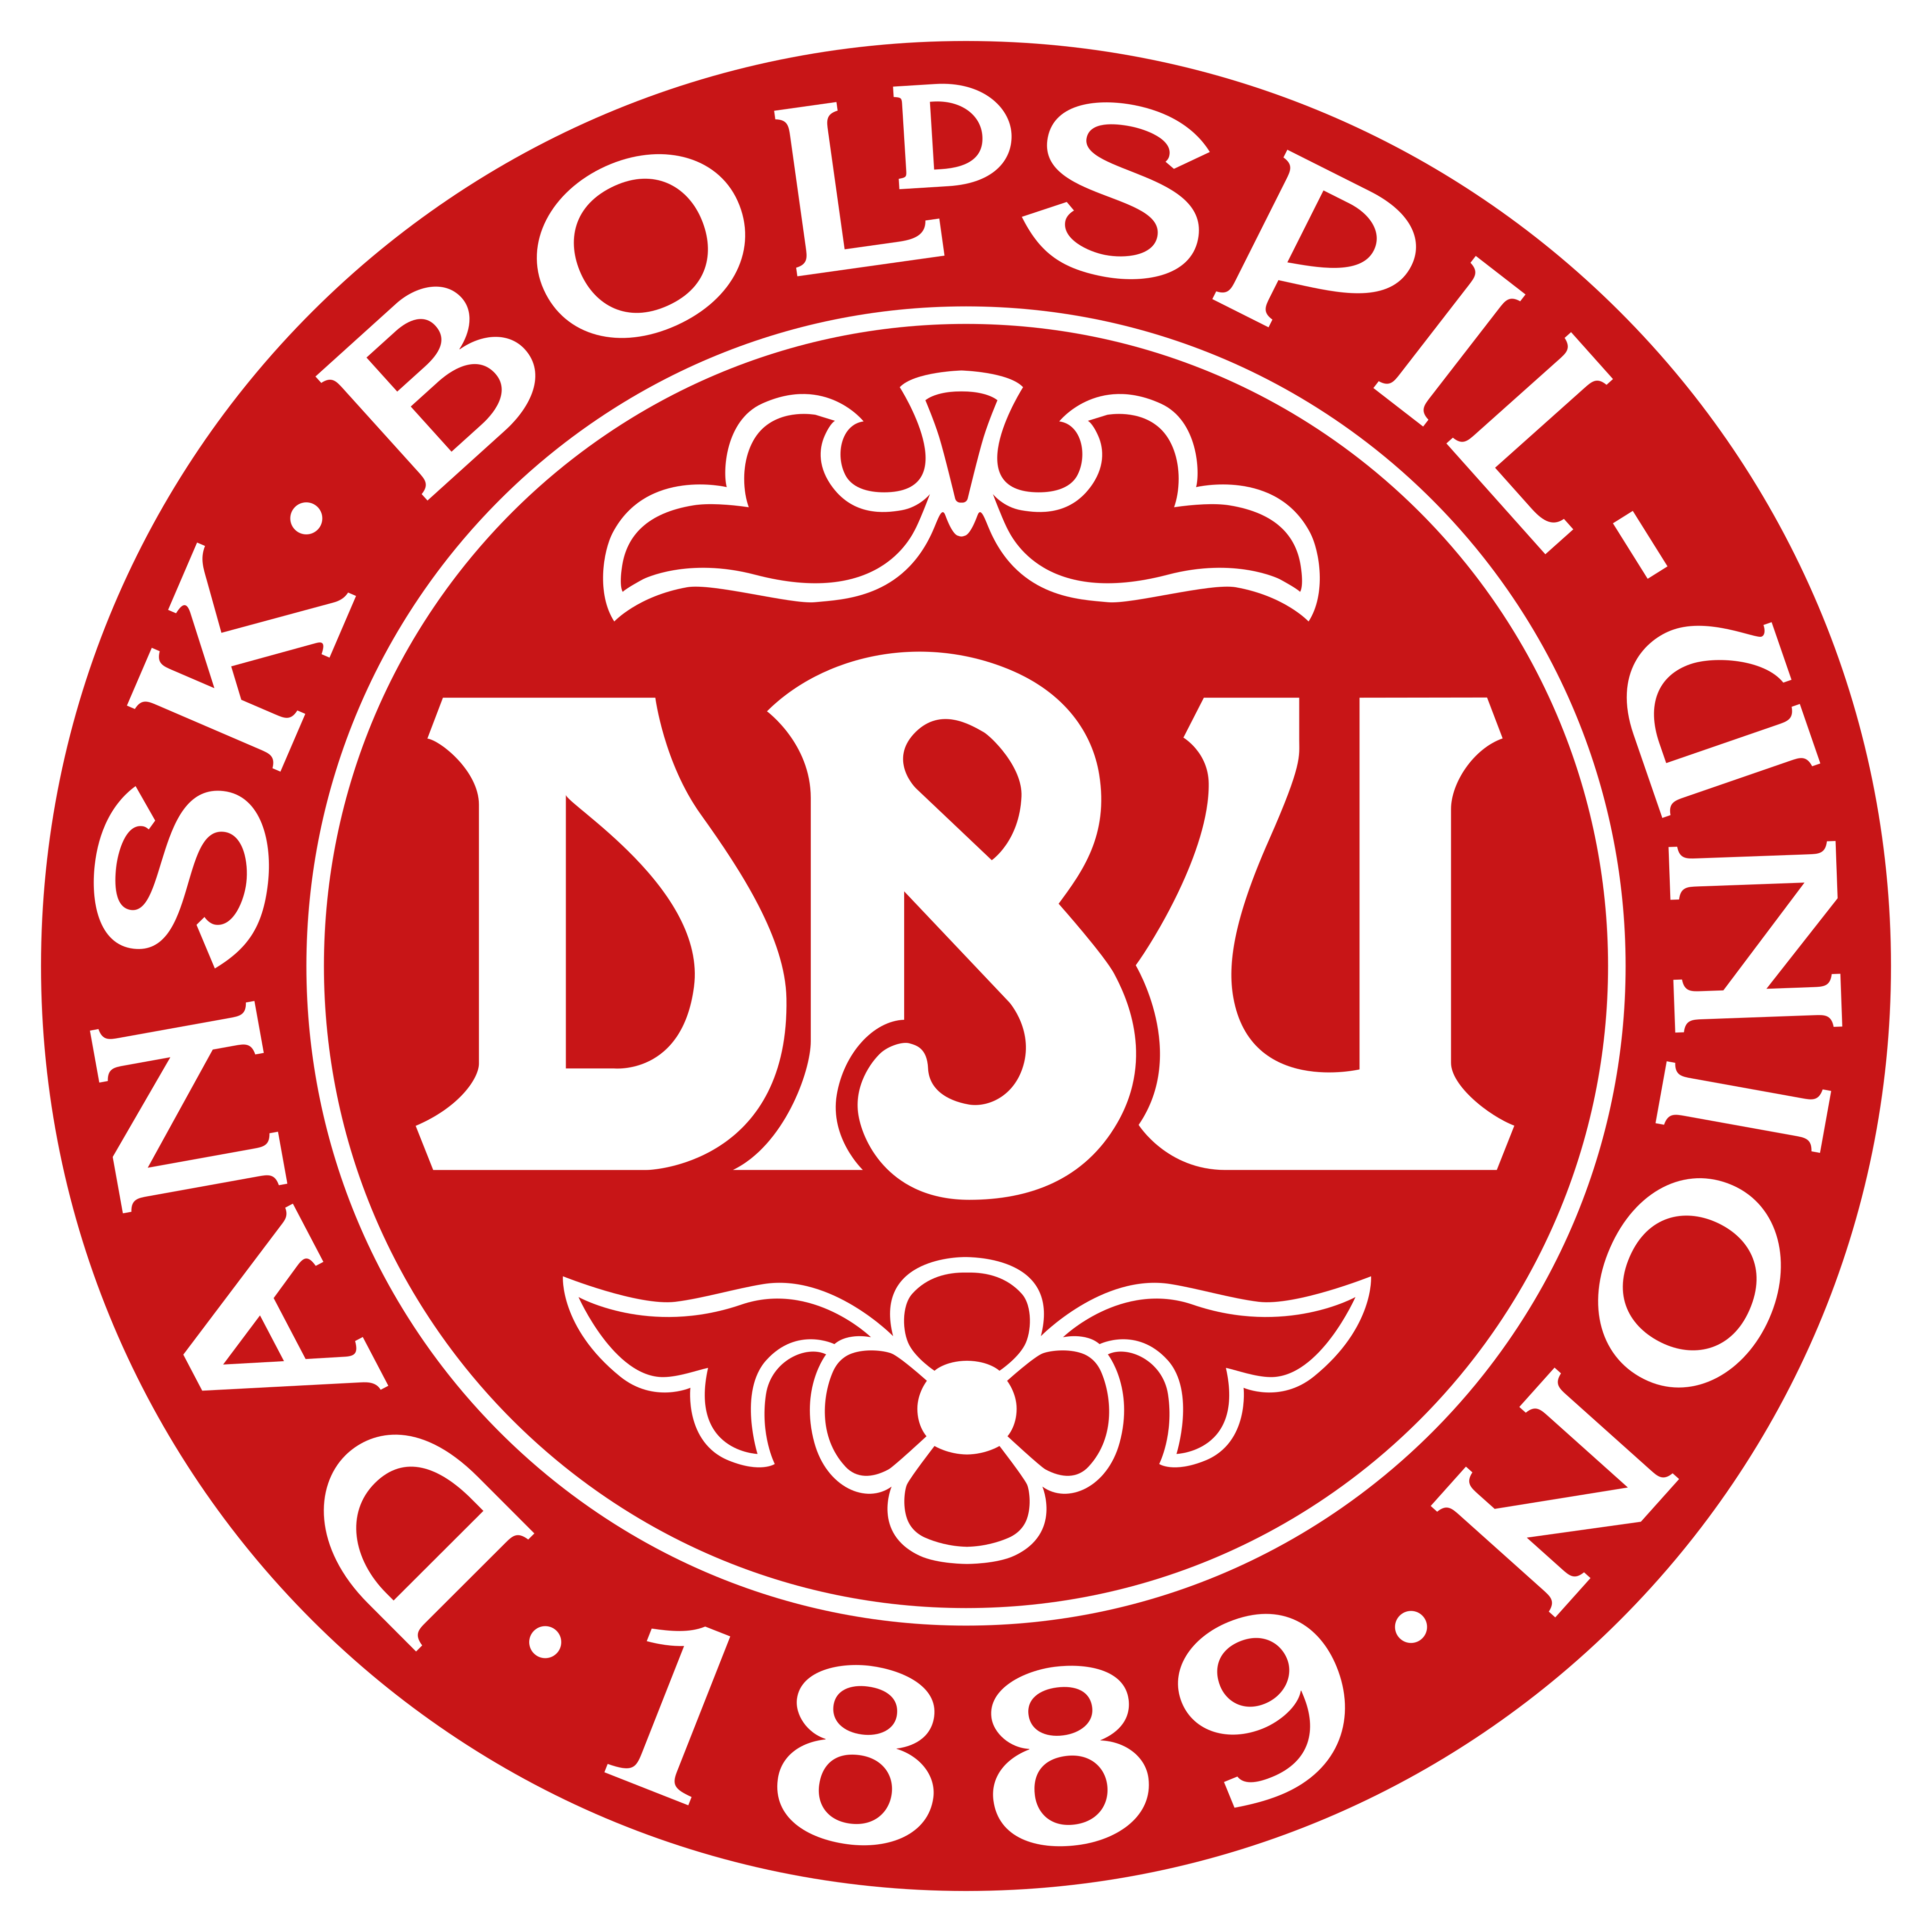 denmark national football team logo - Équipe du Danemark de Football Logo